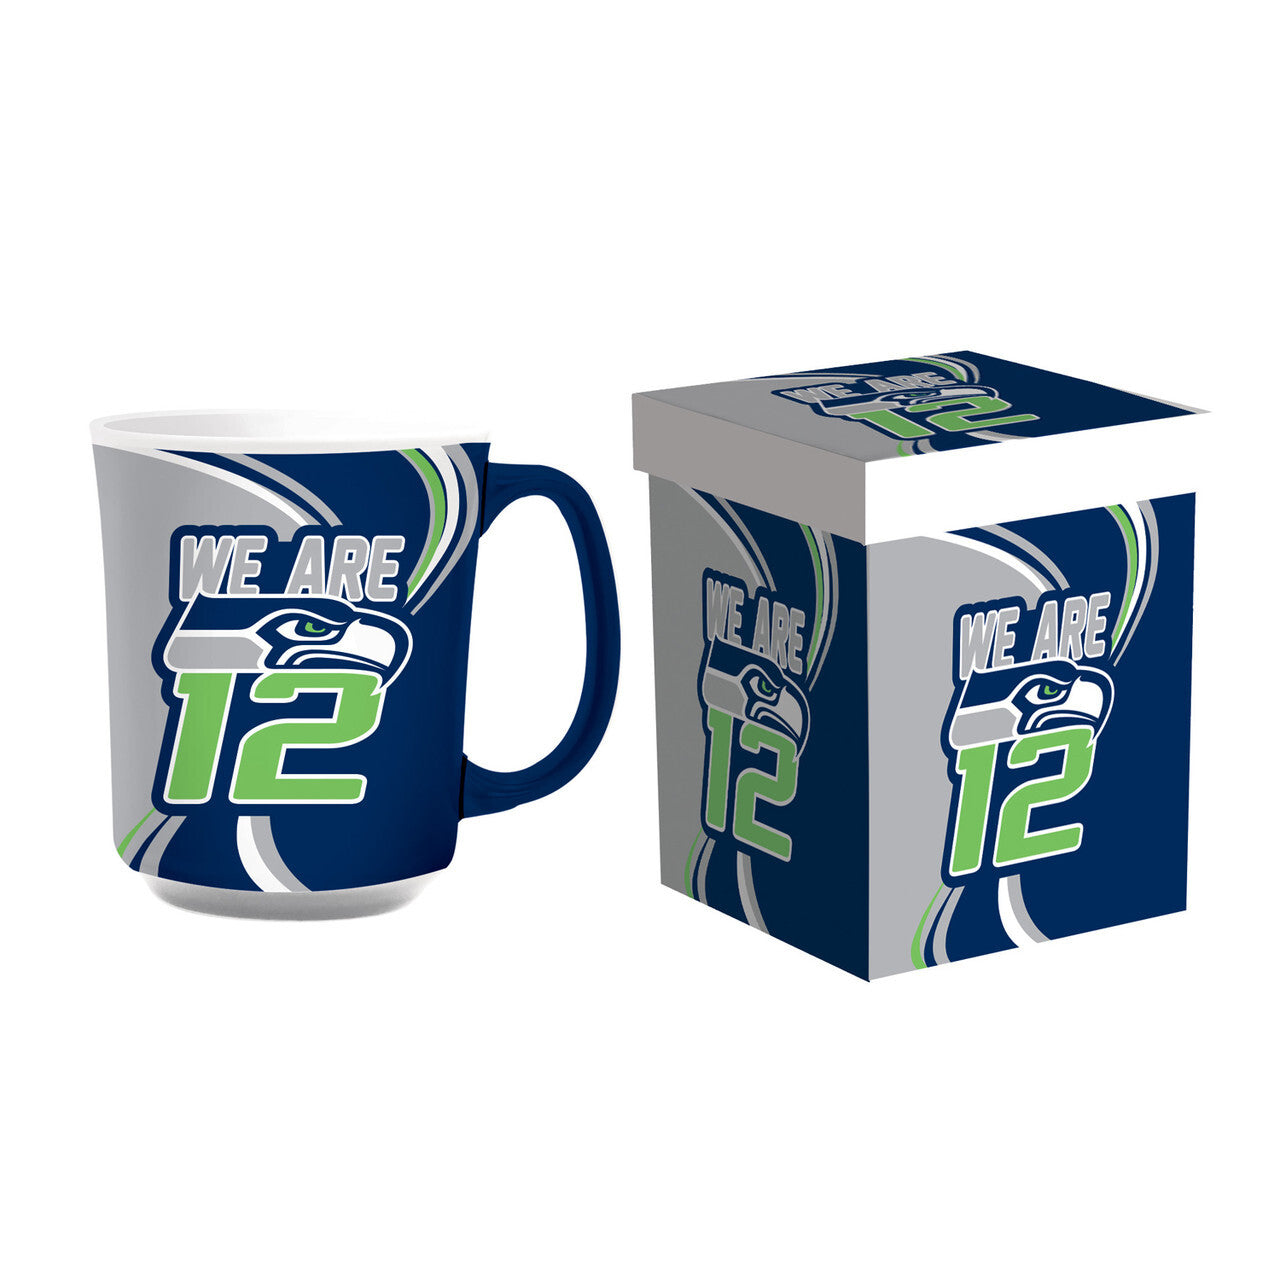 Seattle Seahawks Coffee Mug 14oz Ceramic with Matching Box